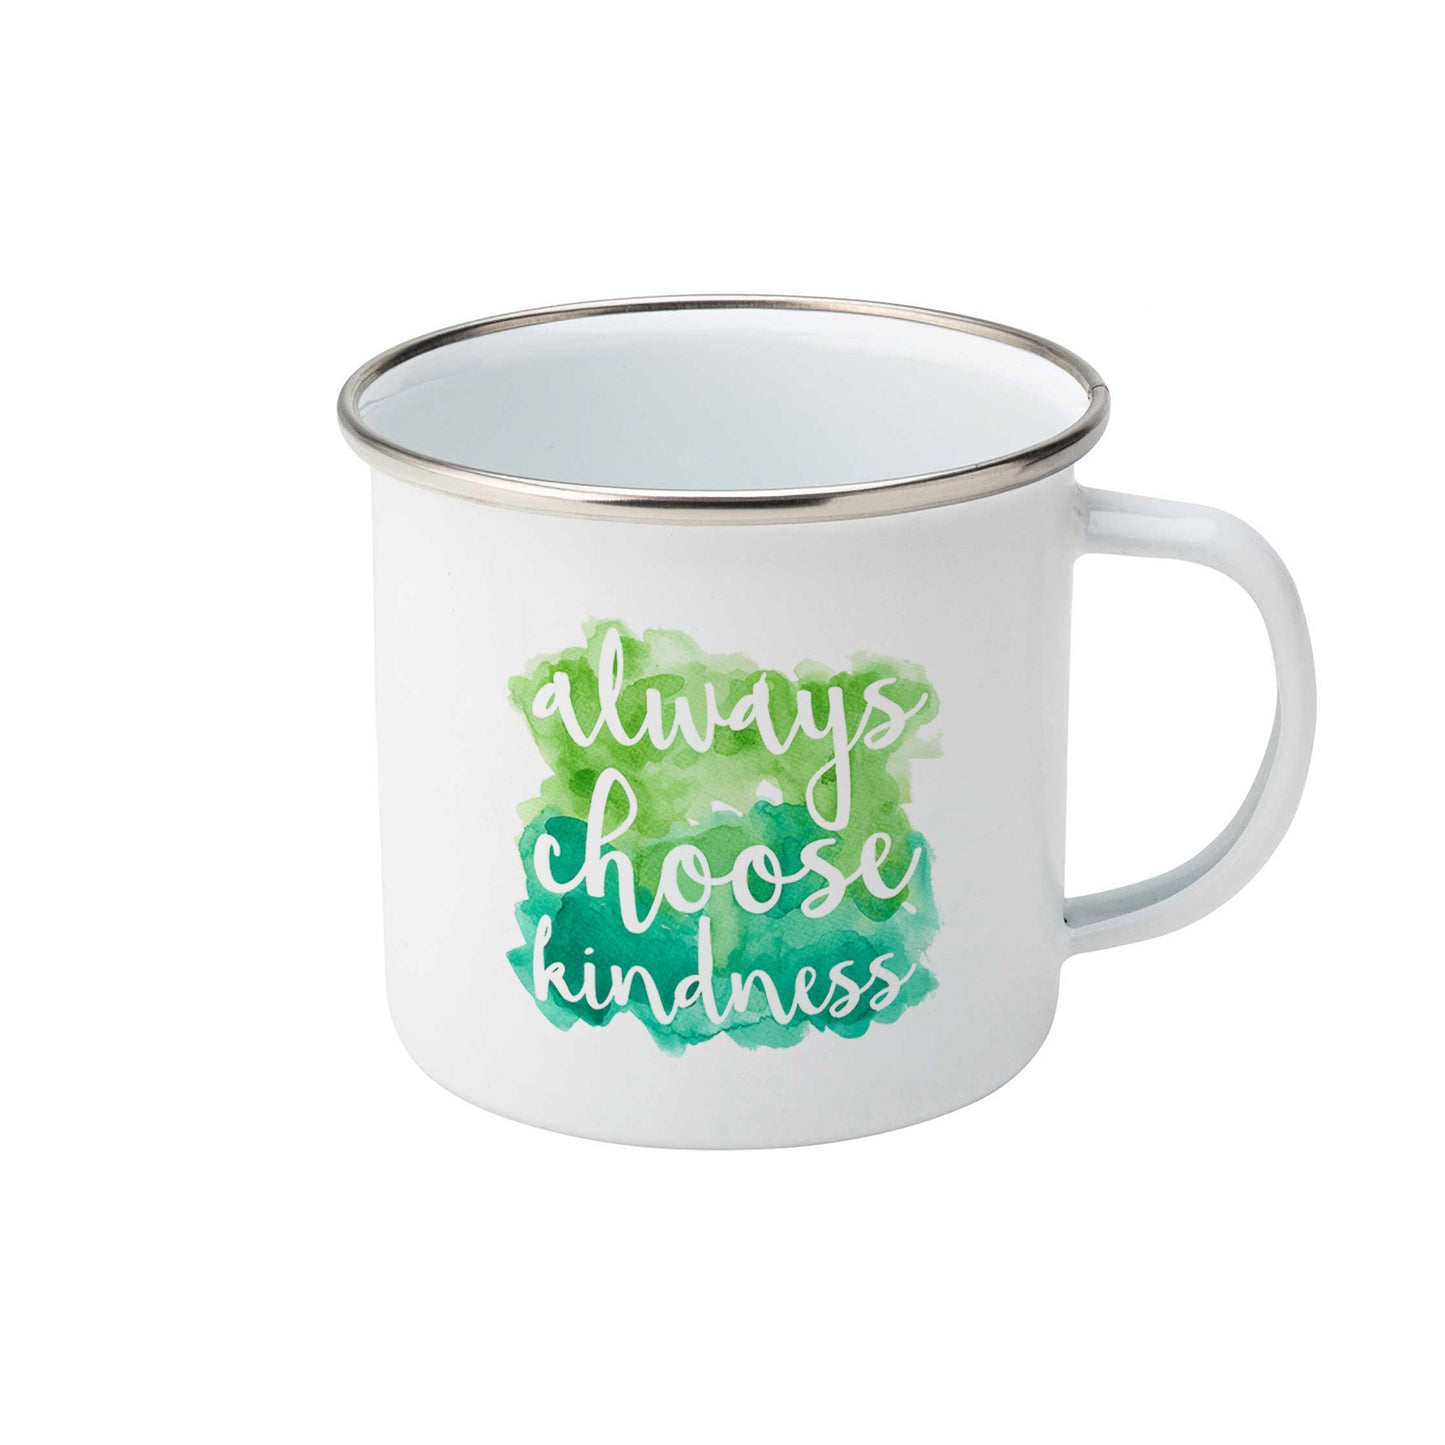 Always choose kindness | Enamel mug